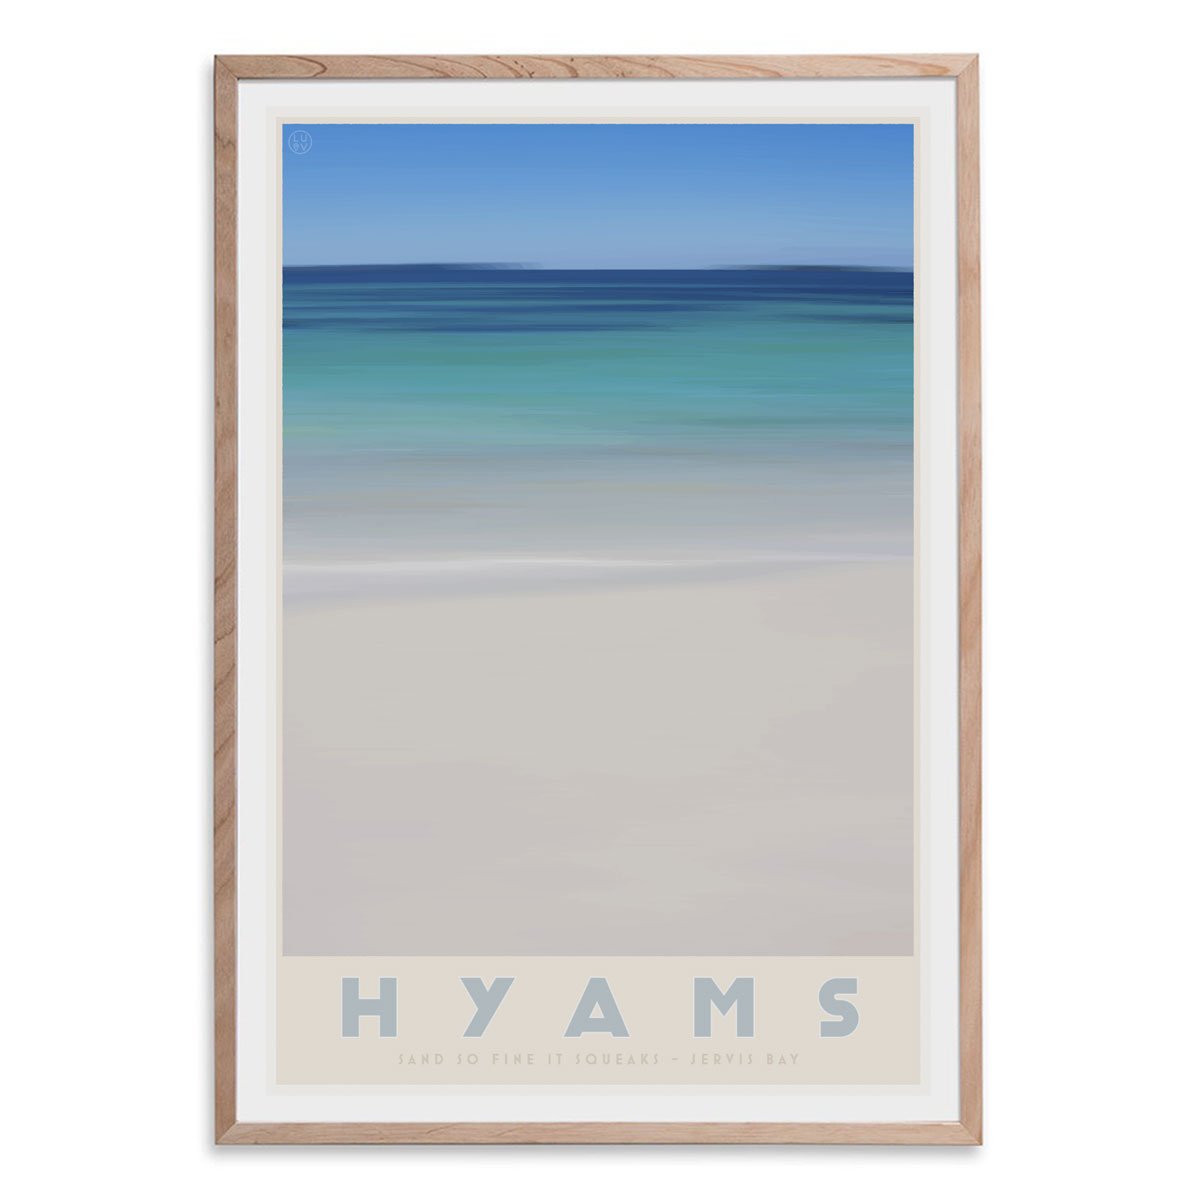 Hyams Beach raw wood framed print. Vintage travel style. original design by places we luv